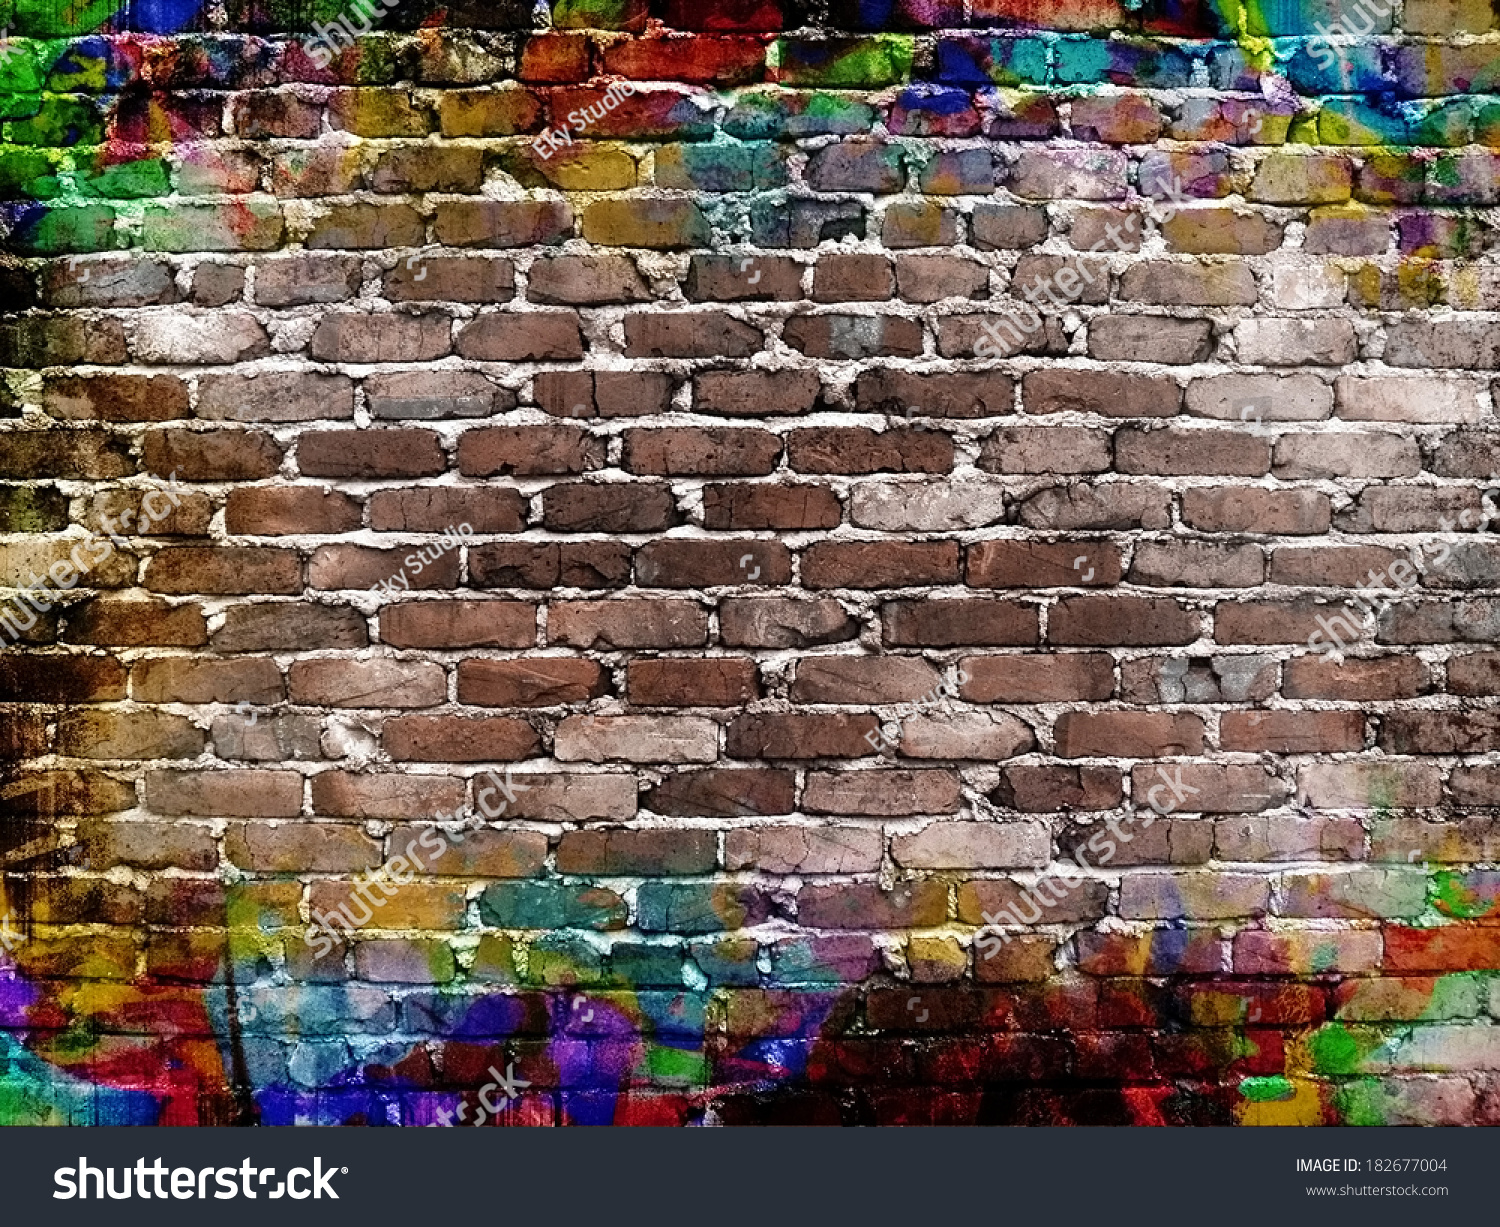 Graffiti Brick Wall Stock Illustration 182677004 - Shutterstock